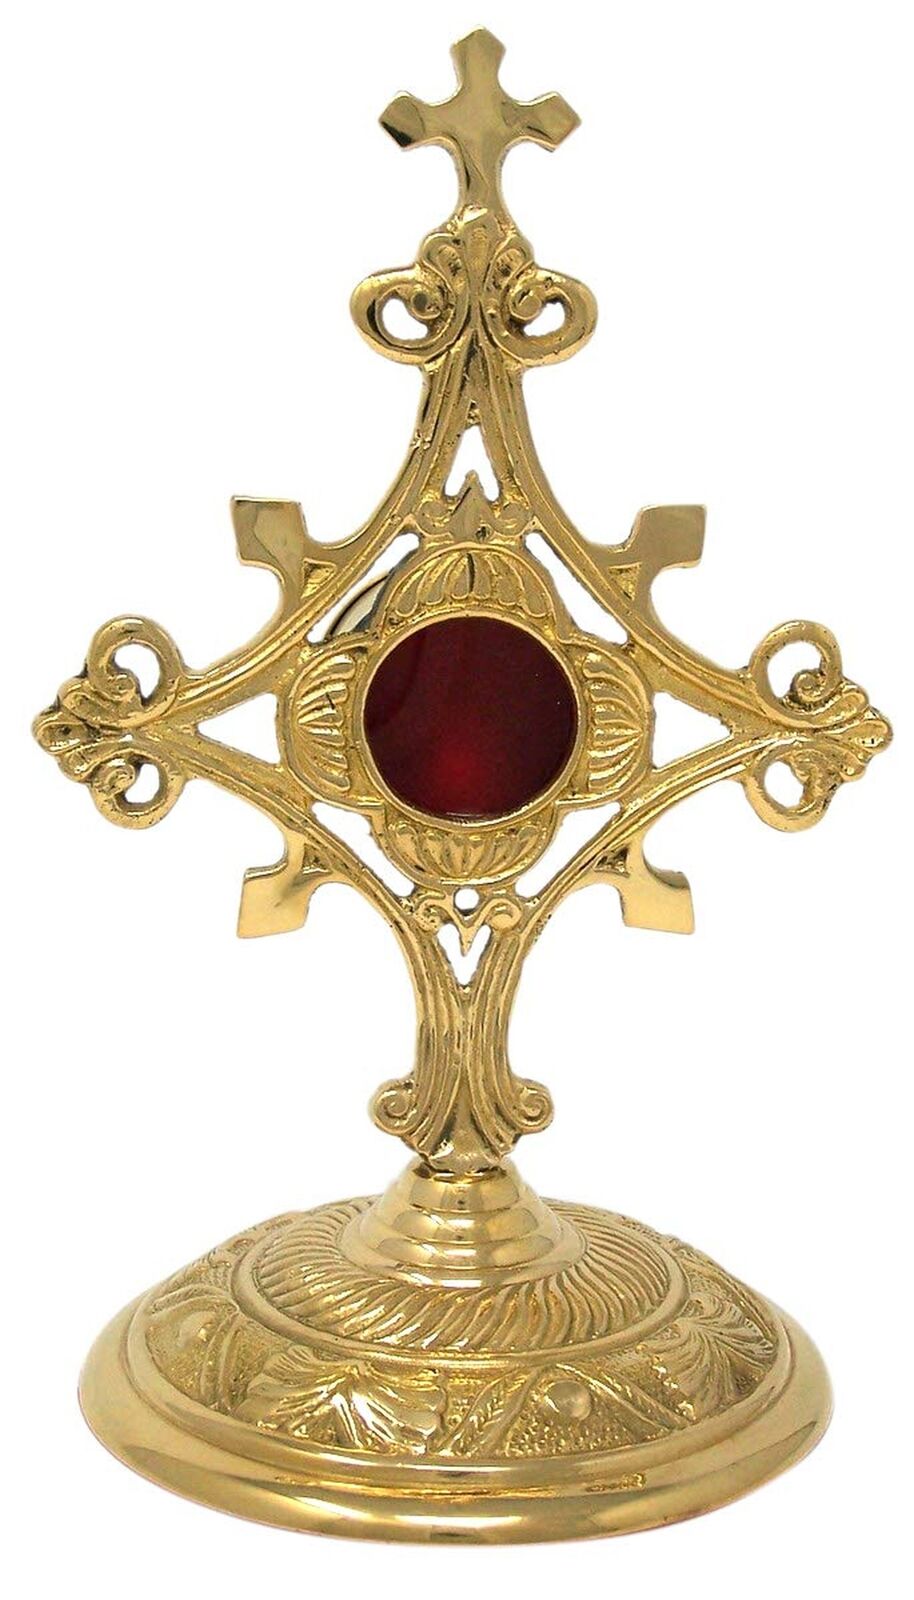 Needzo Small Brass Monstrance, Cross Shaped Reliquary, Catholic Church Suppli...